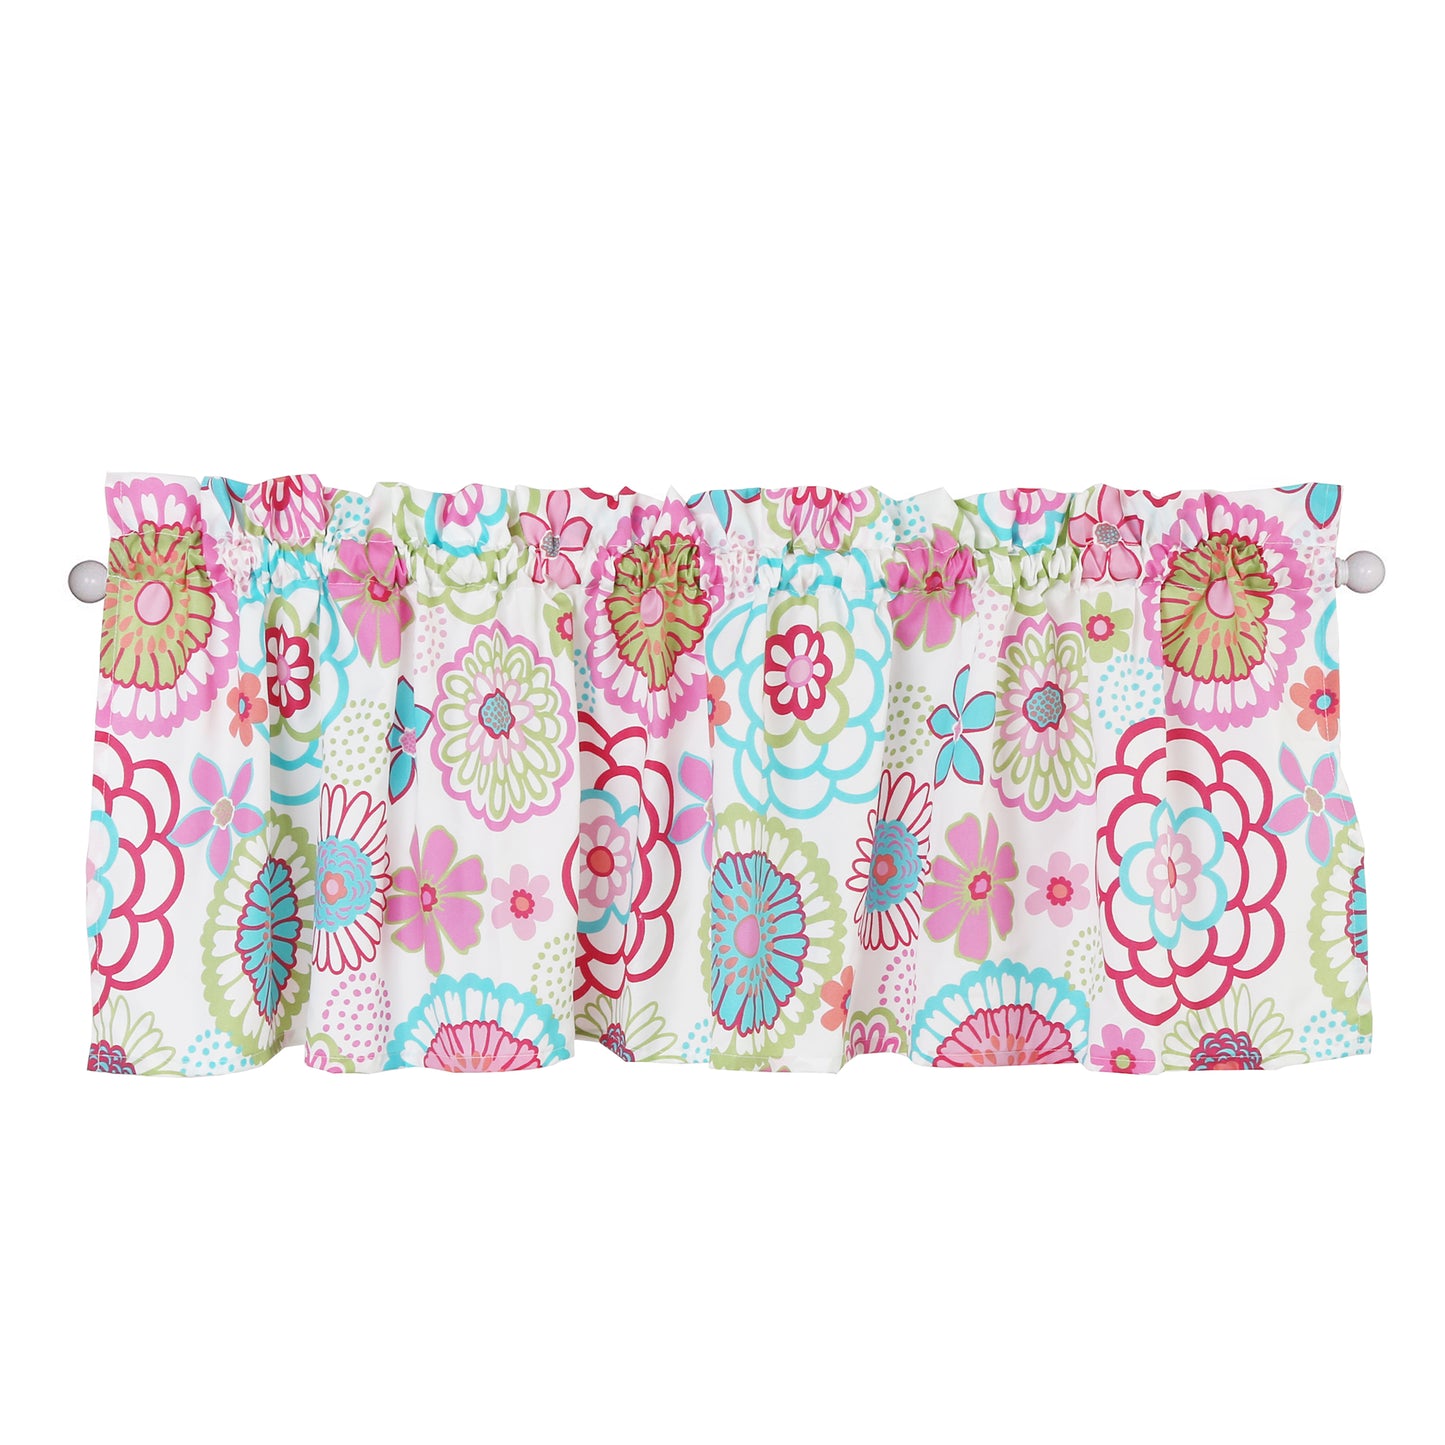 Mariah Floral Pink Polka Dot Reversible Comforter Set w/ Decor Pillows